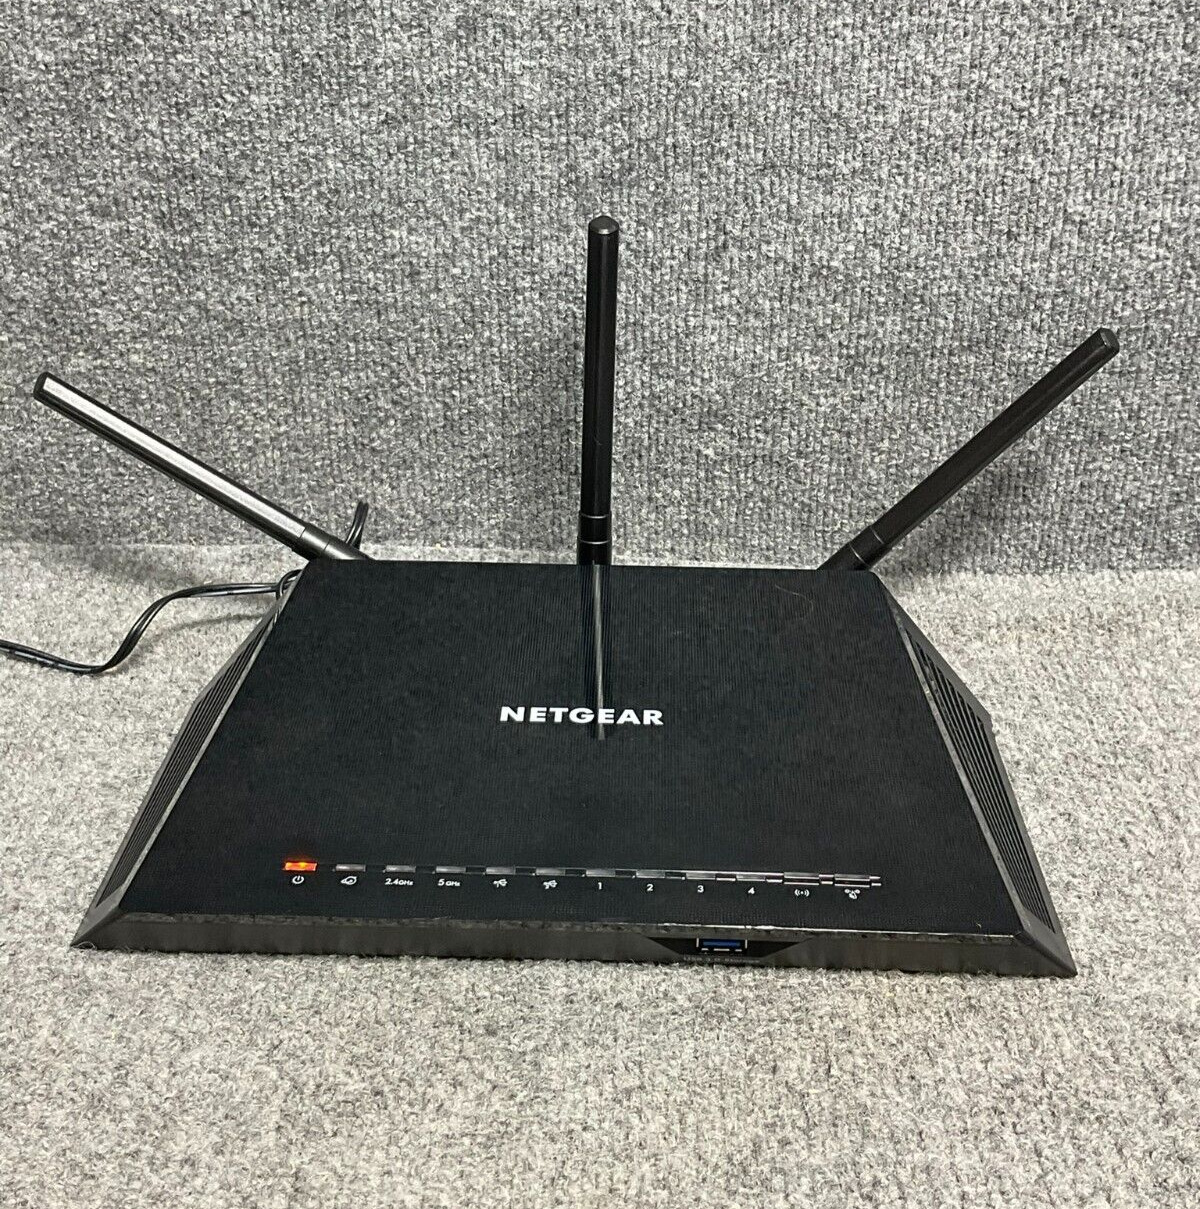 Smart Wi-Fi Router NETGEAR R6400v2 AC1750 4 Ports Dual Band in Black